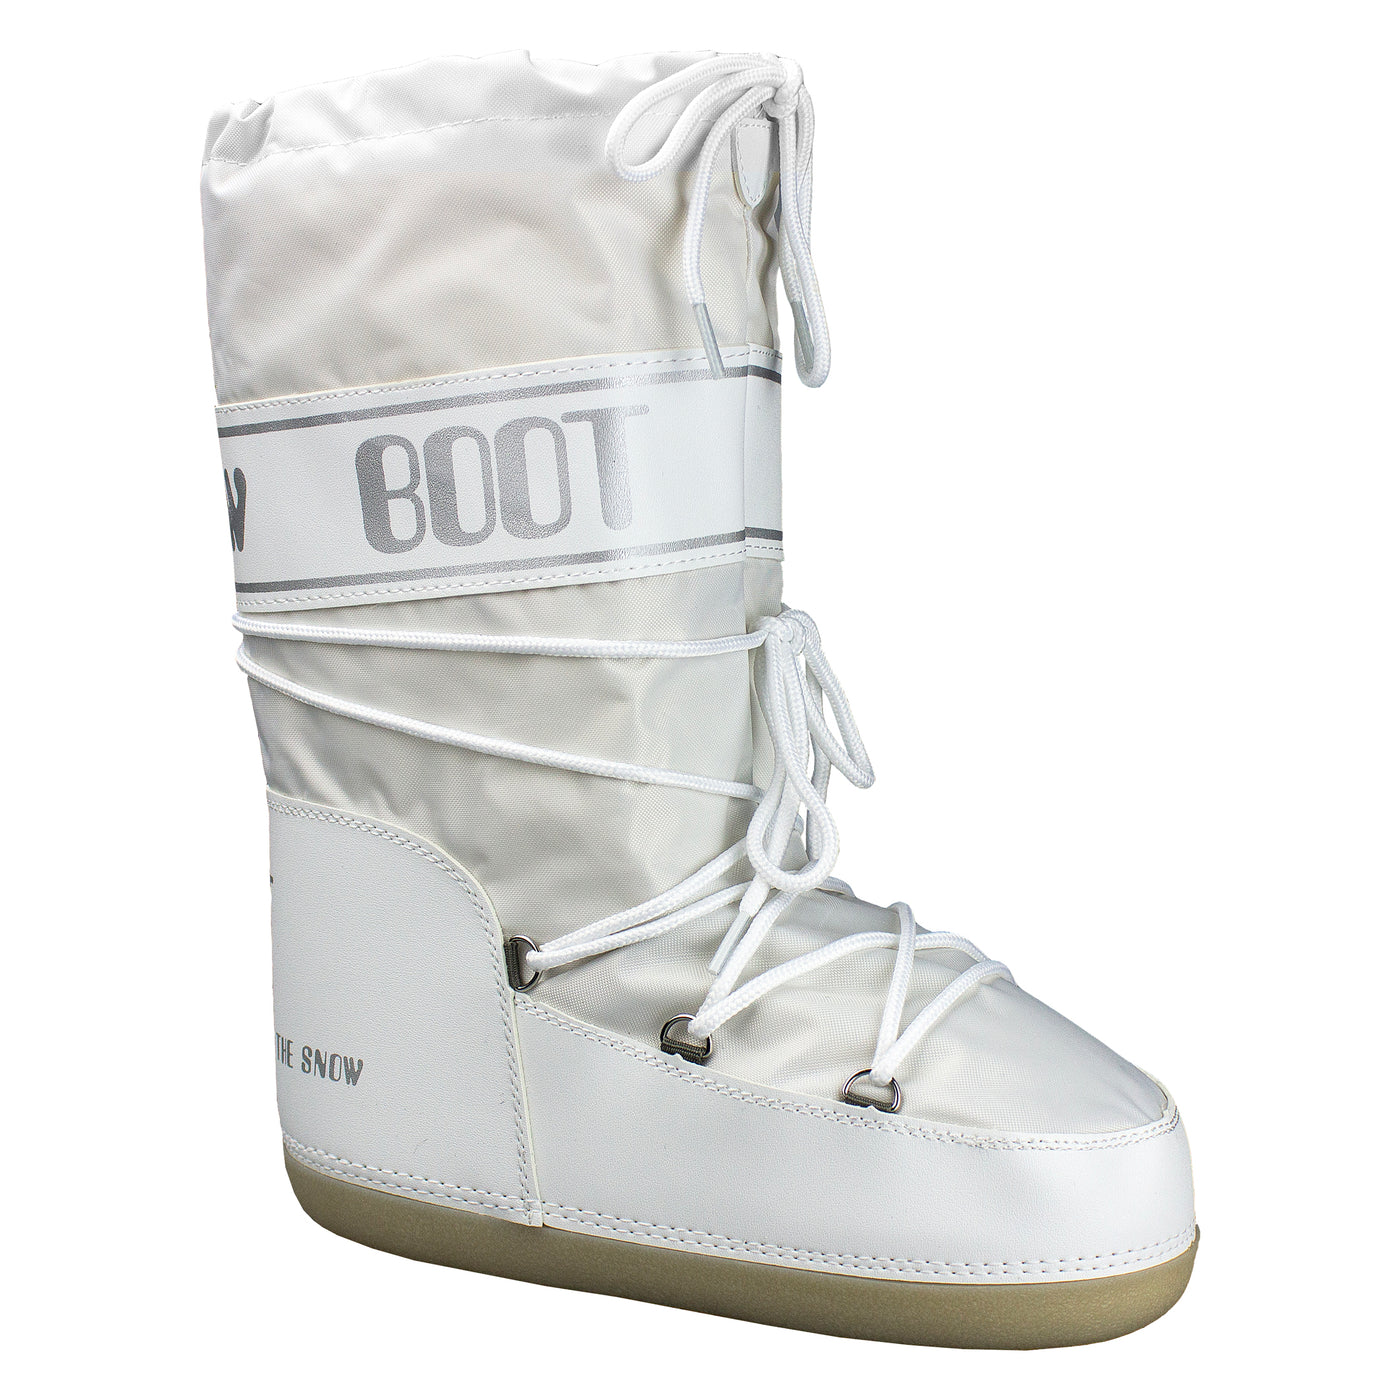 Manbi Kids Snow Boot White